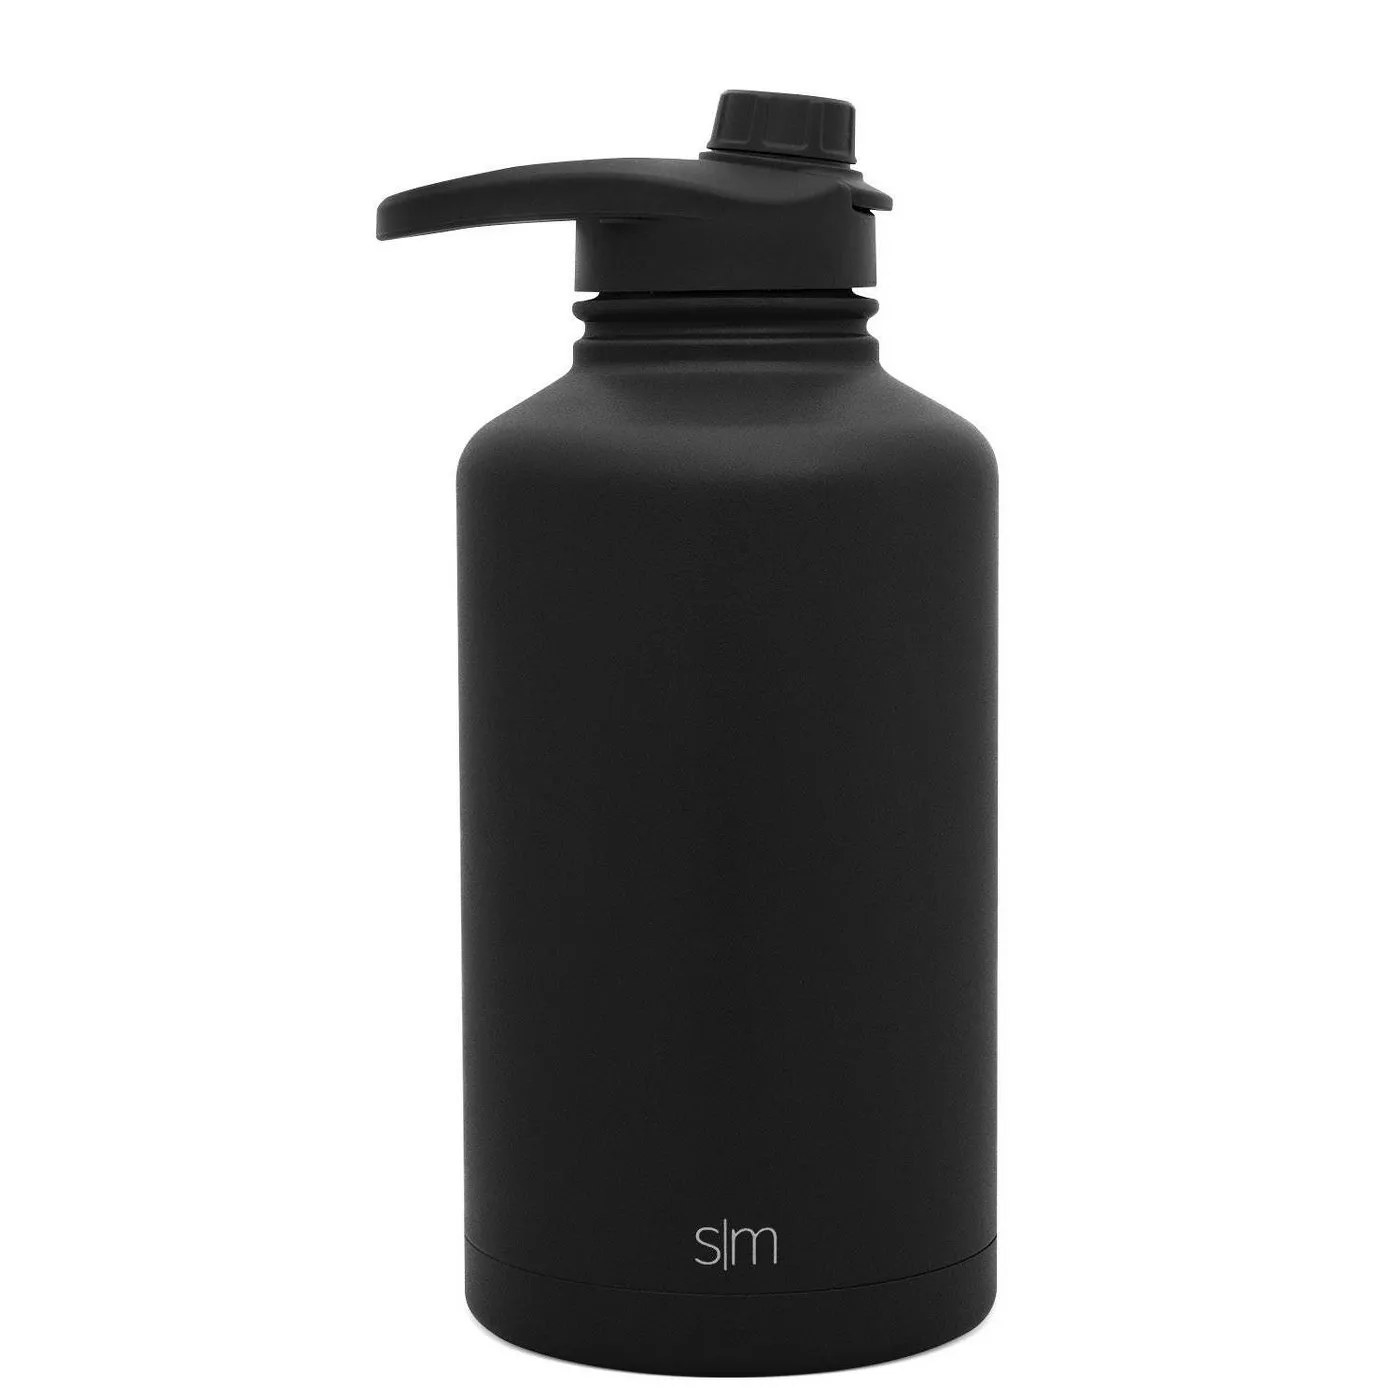 The black Simple Modern water bottle